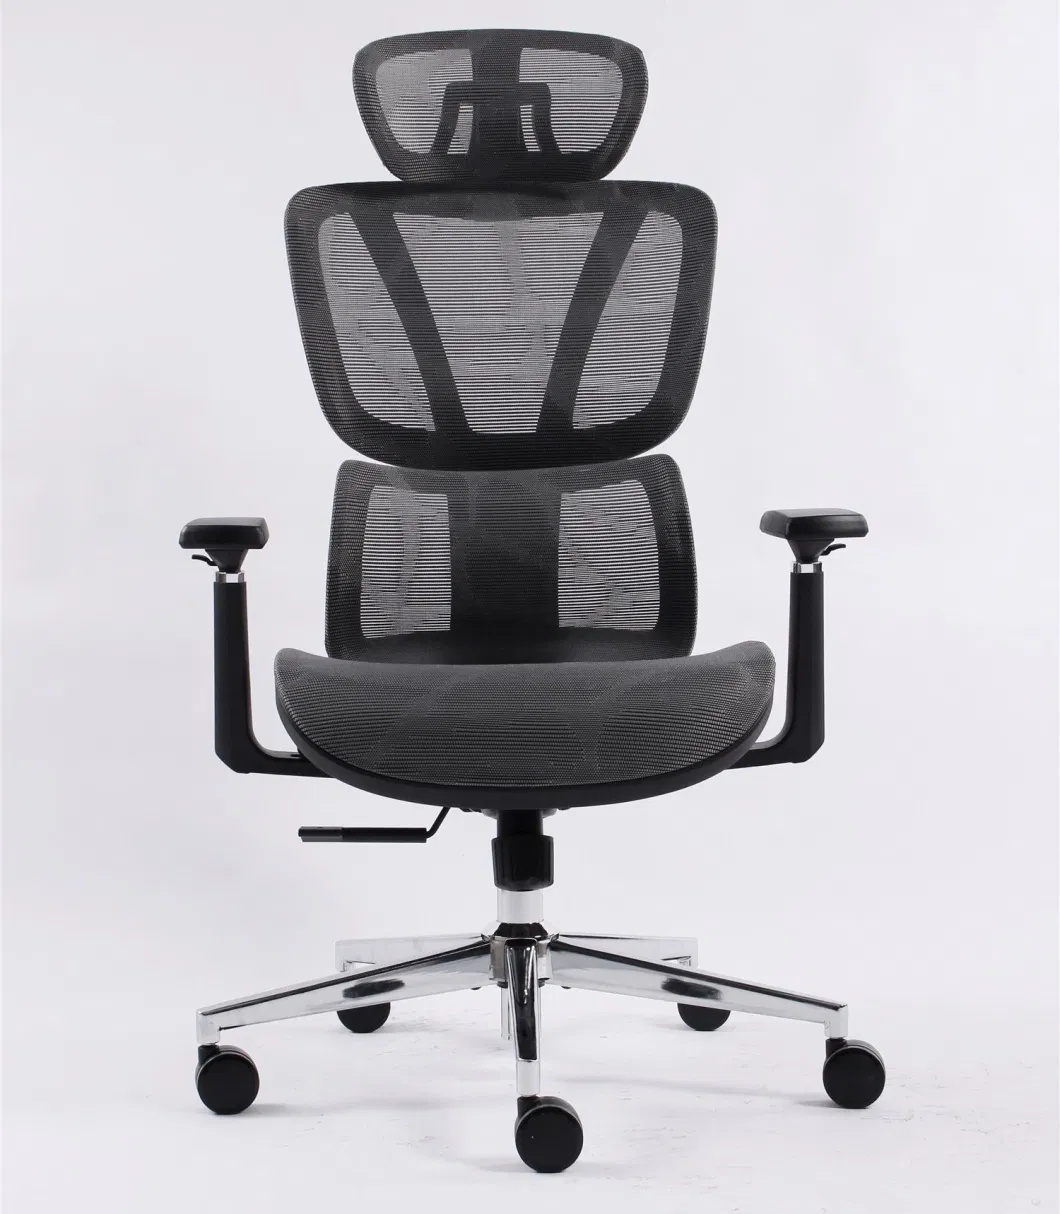 2023 New Adjustable Lumbar Mesh Gaming Chair Metal Kd Base Office Chair